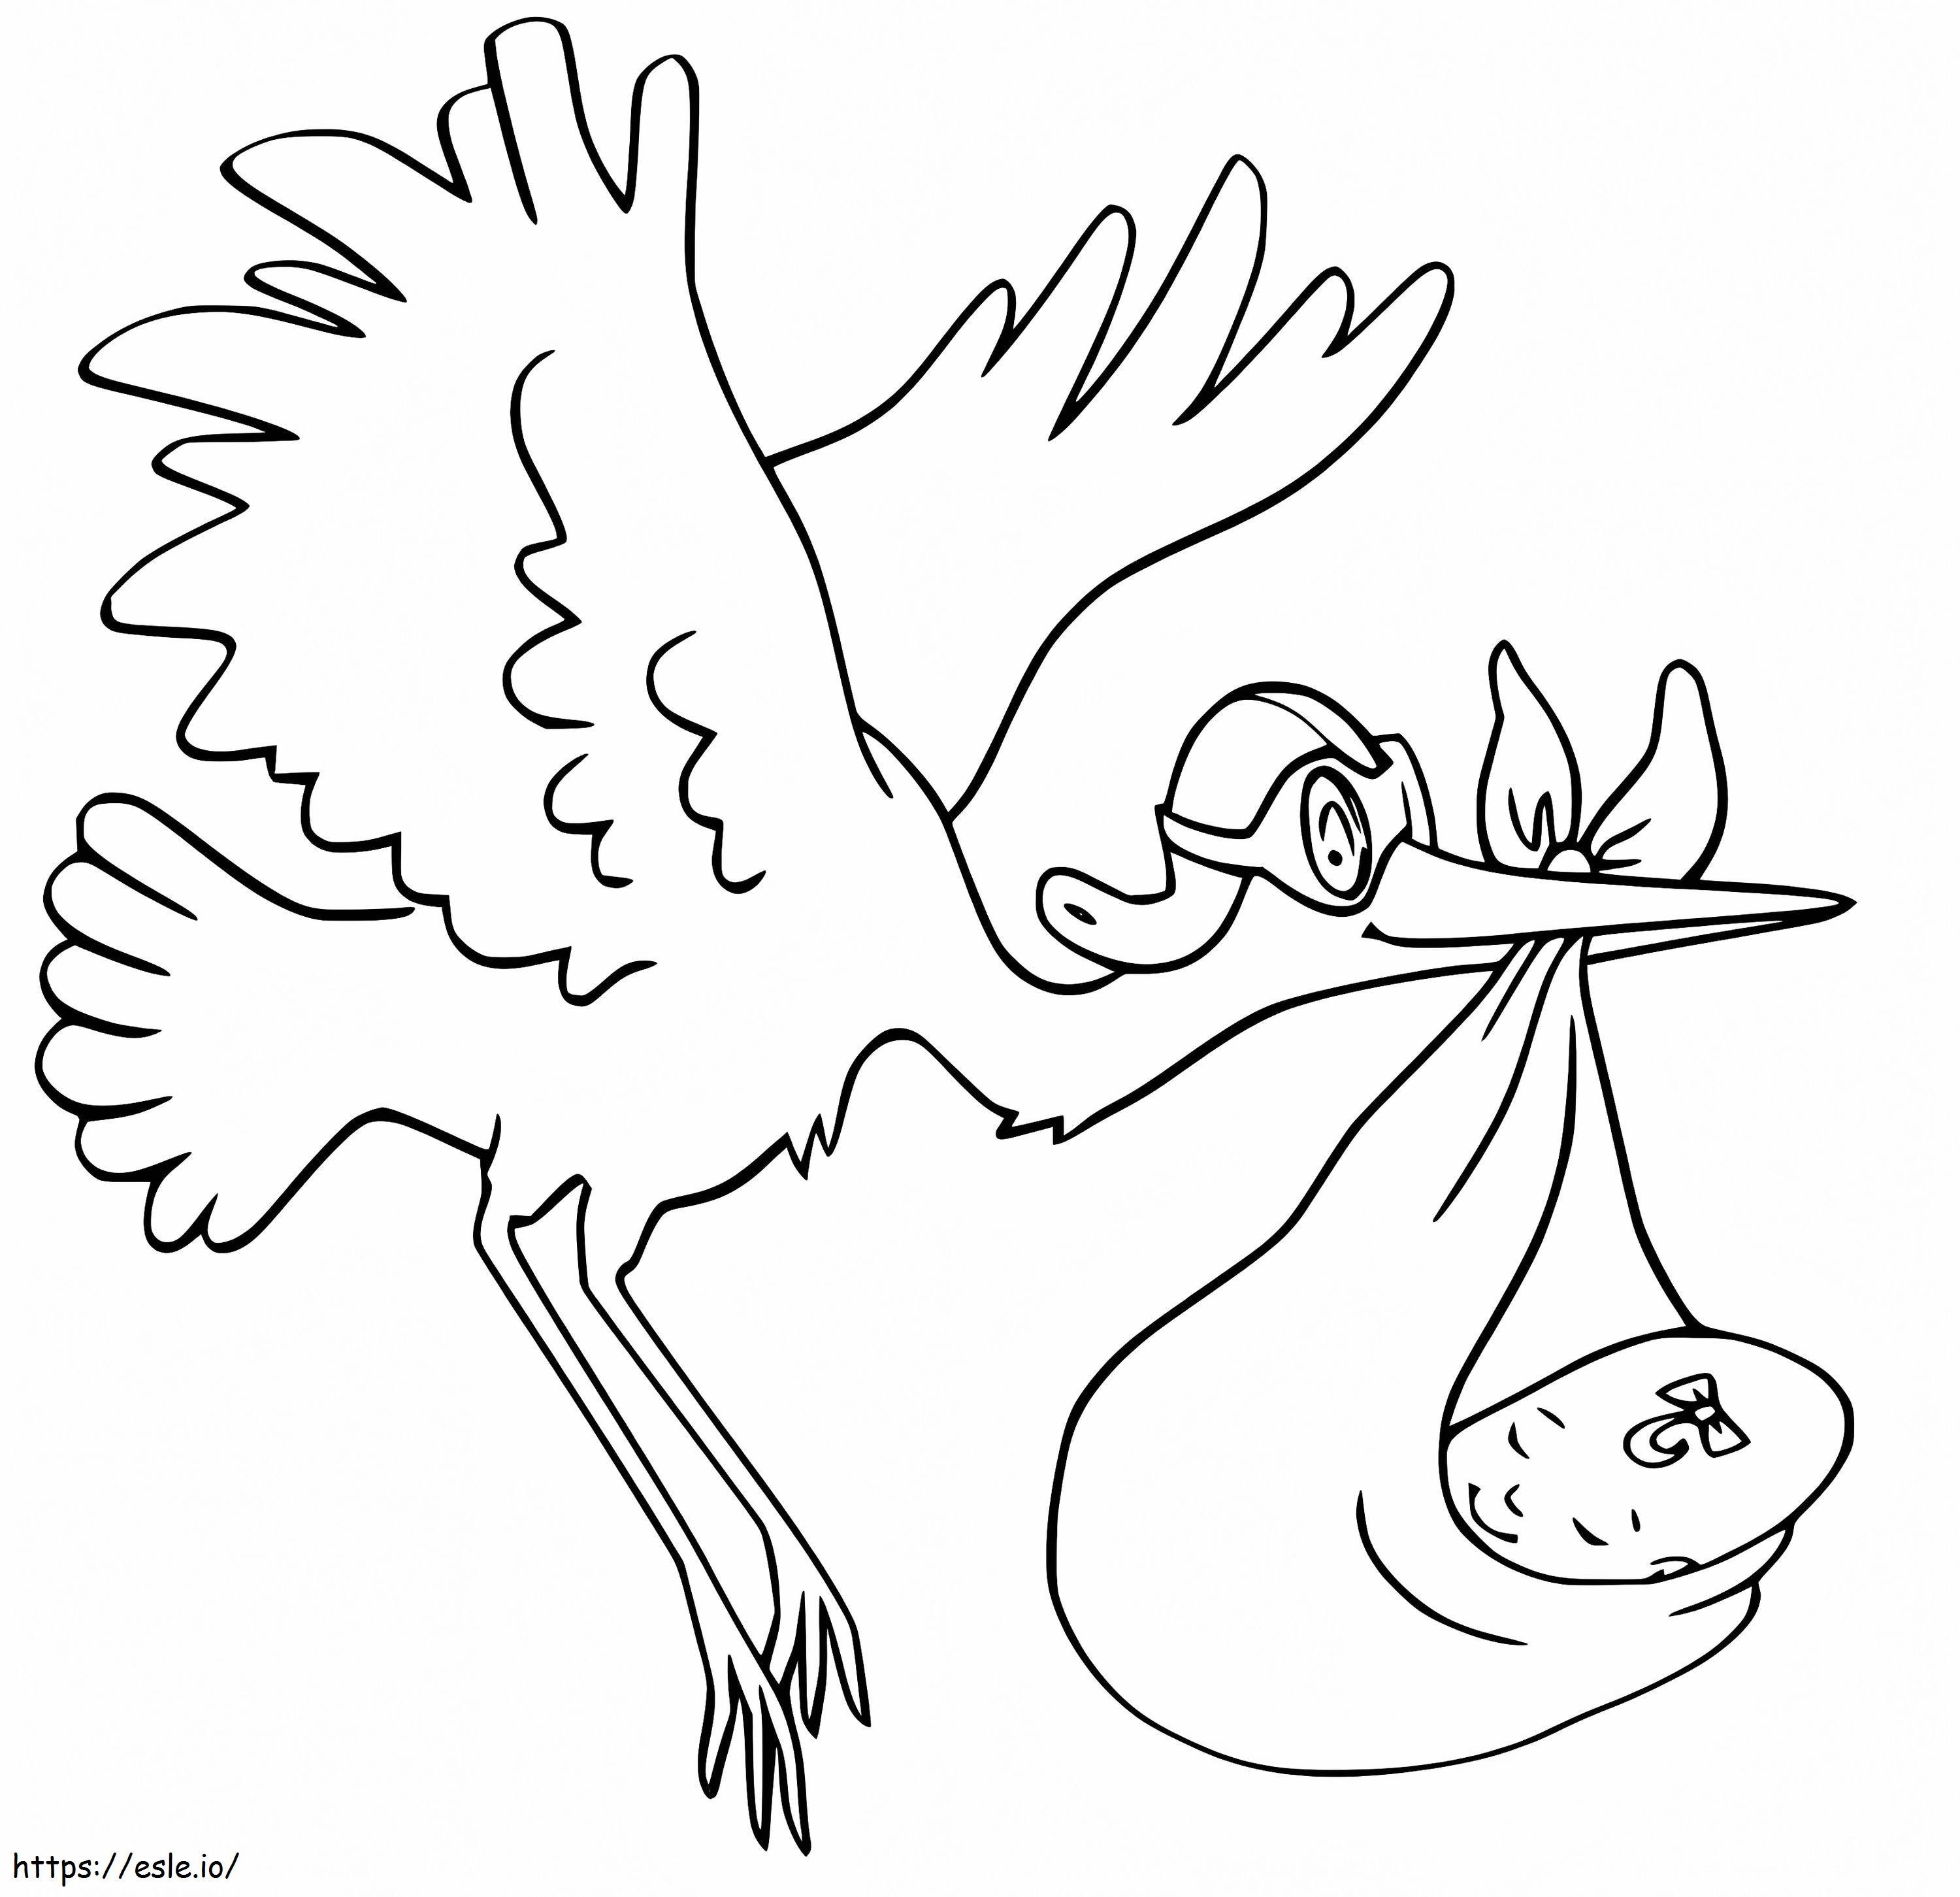 Cartoon Stork coloring page